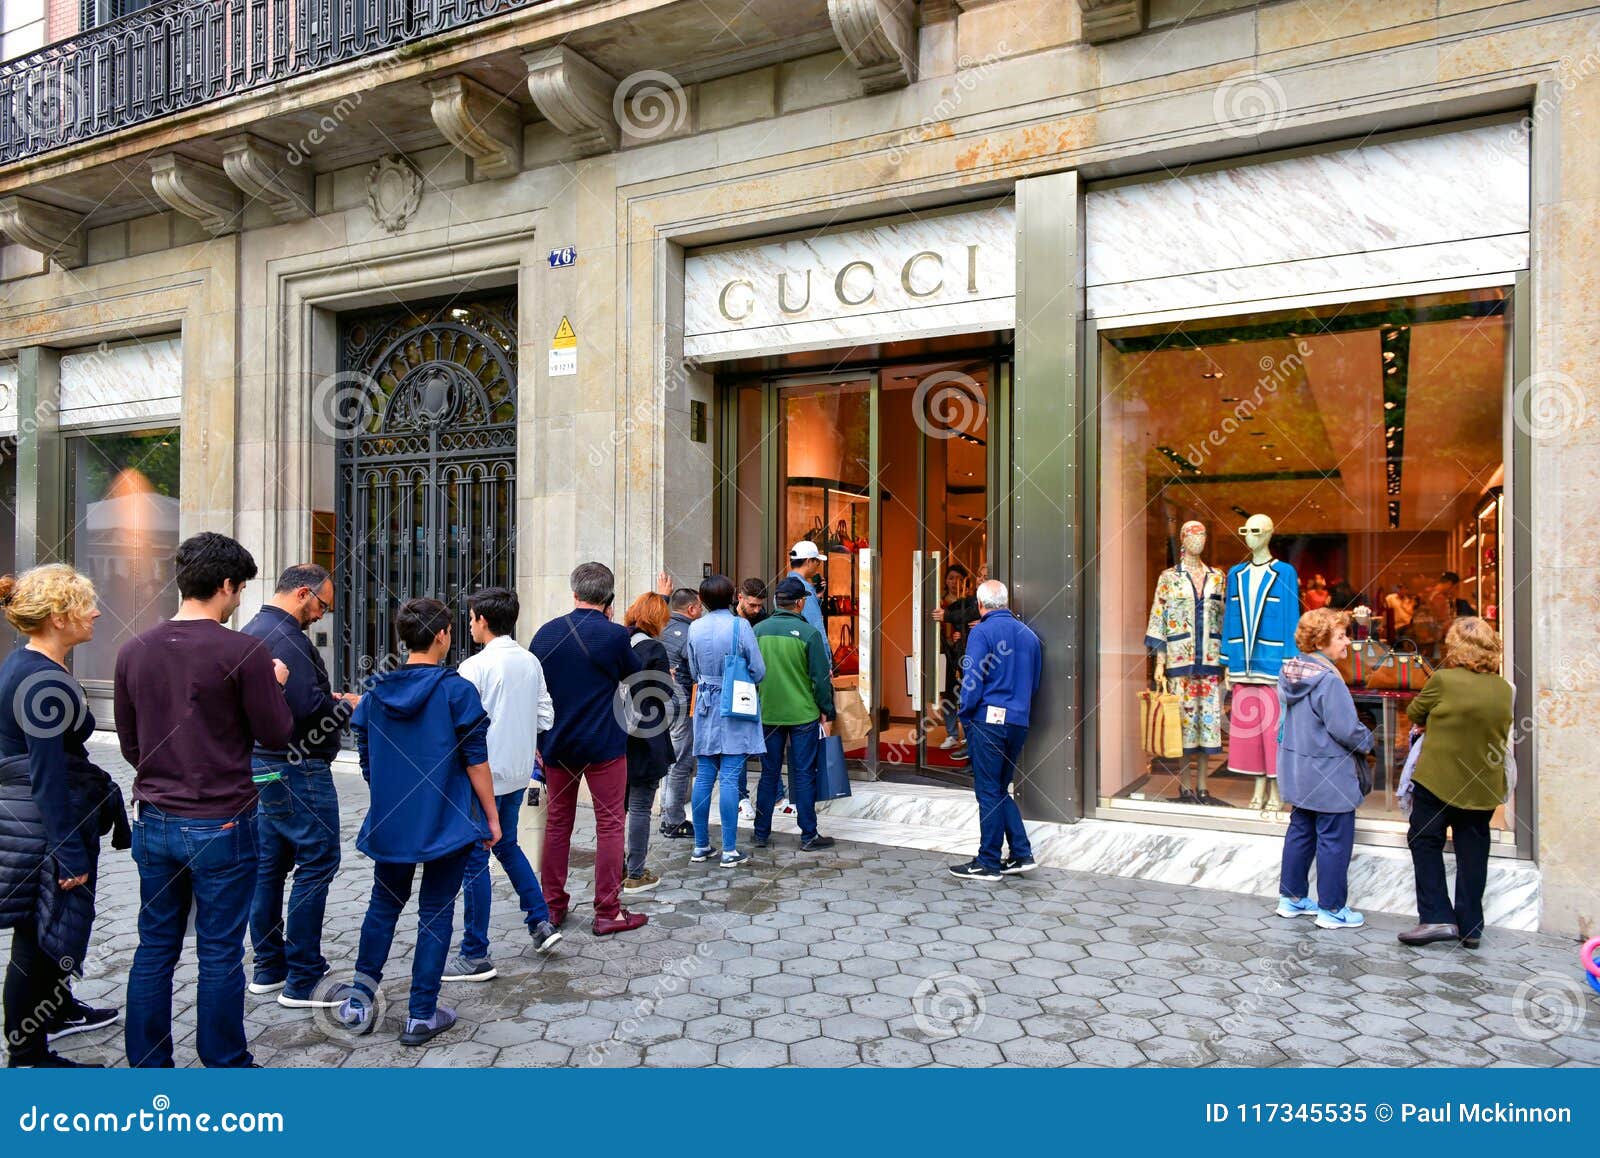 Store in Barcelona, Spain Image - of apparel, display: 117345535